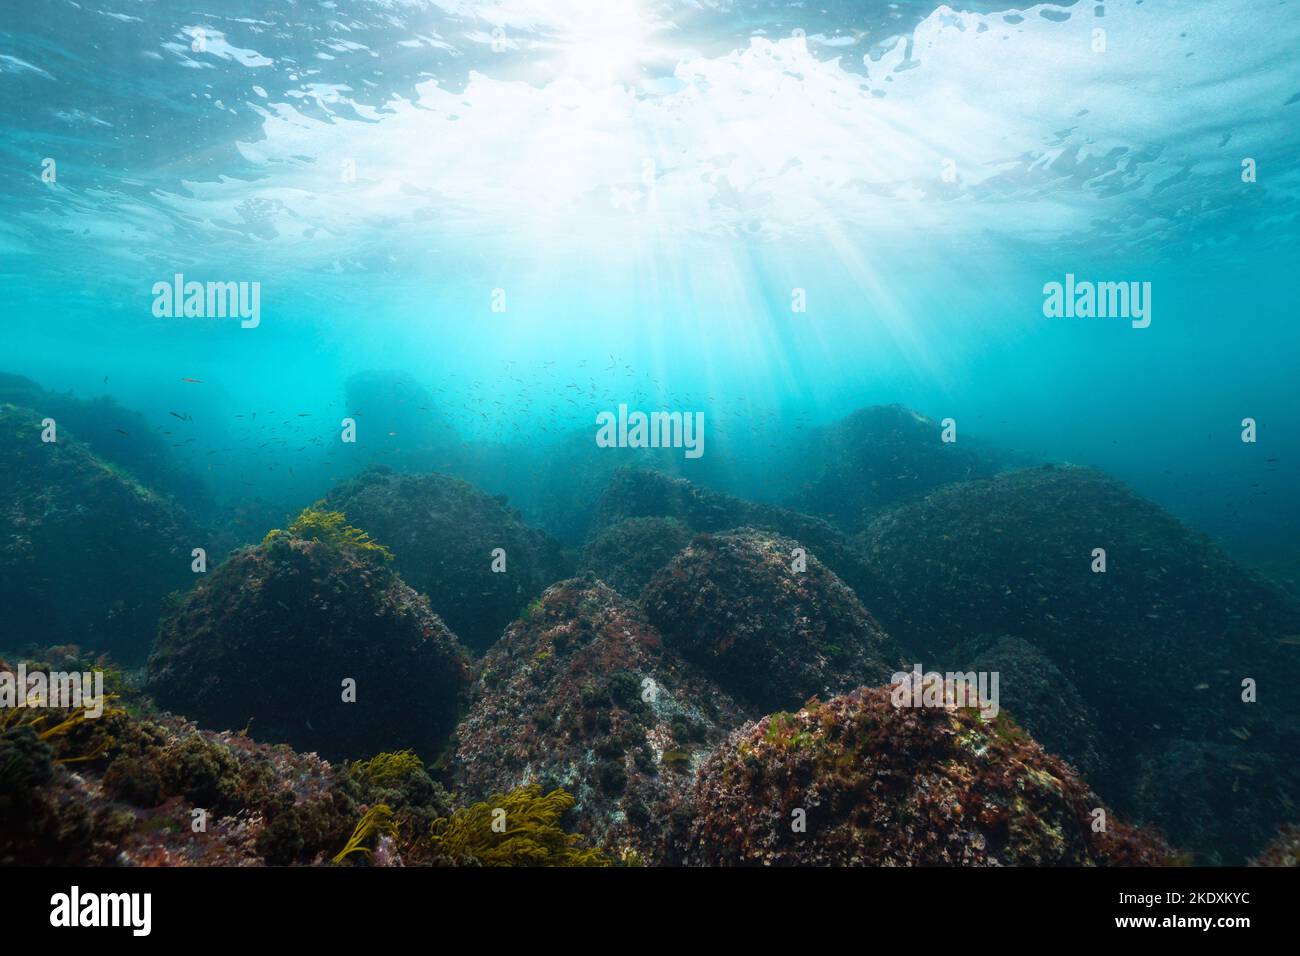 Sunlight underwater with rocks on the ocean floor, Atlantic ocean, Spain, Galicia Stock Photo